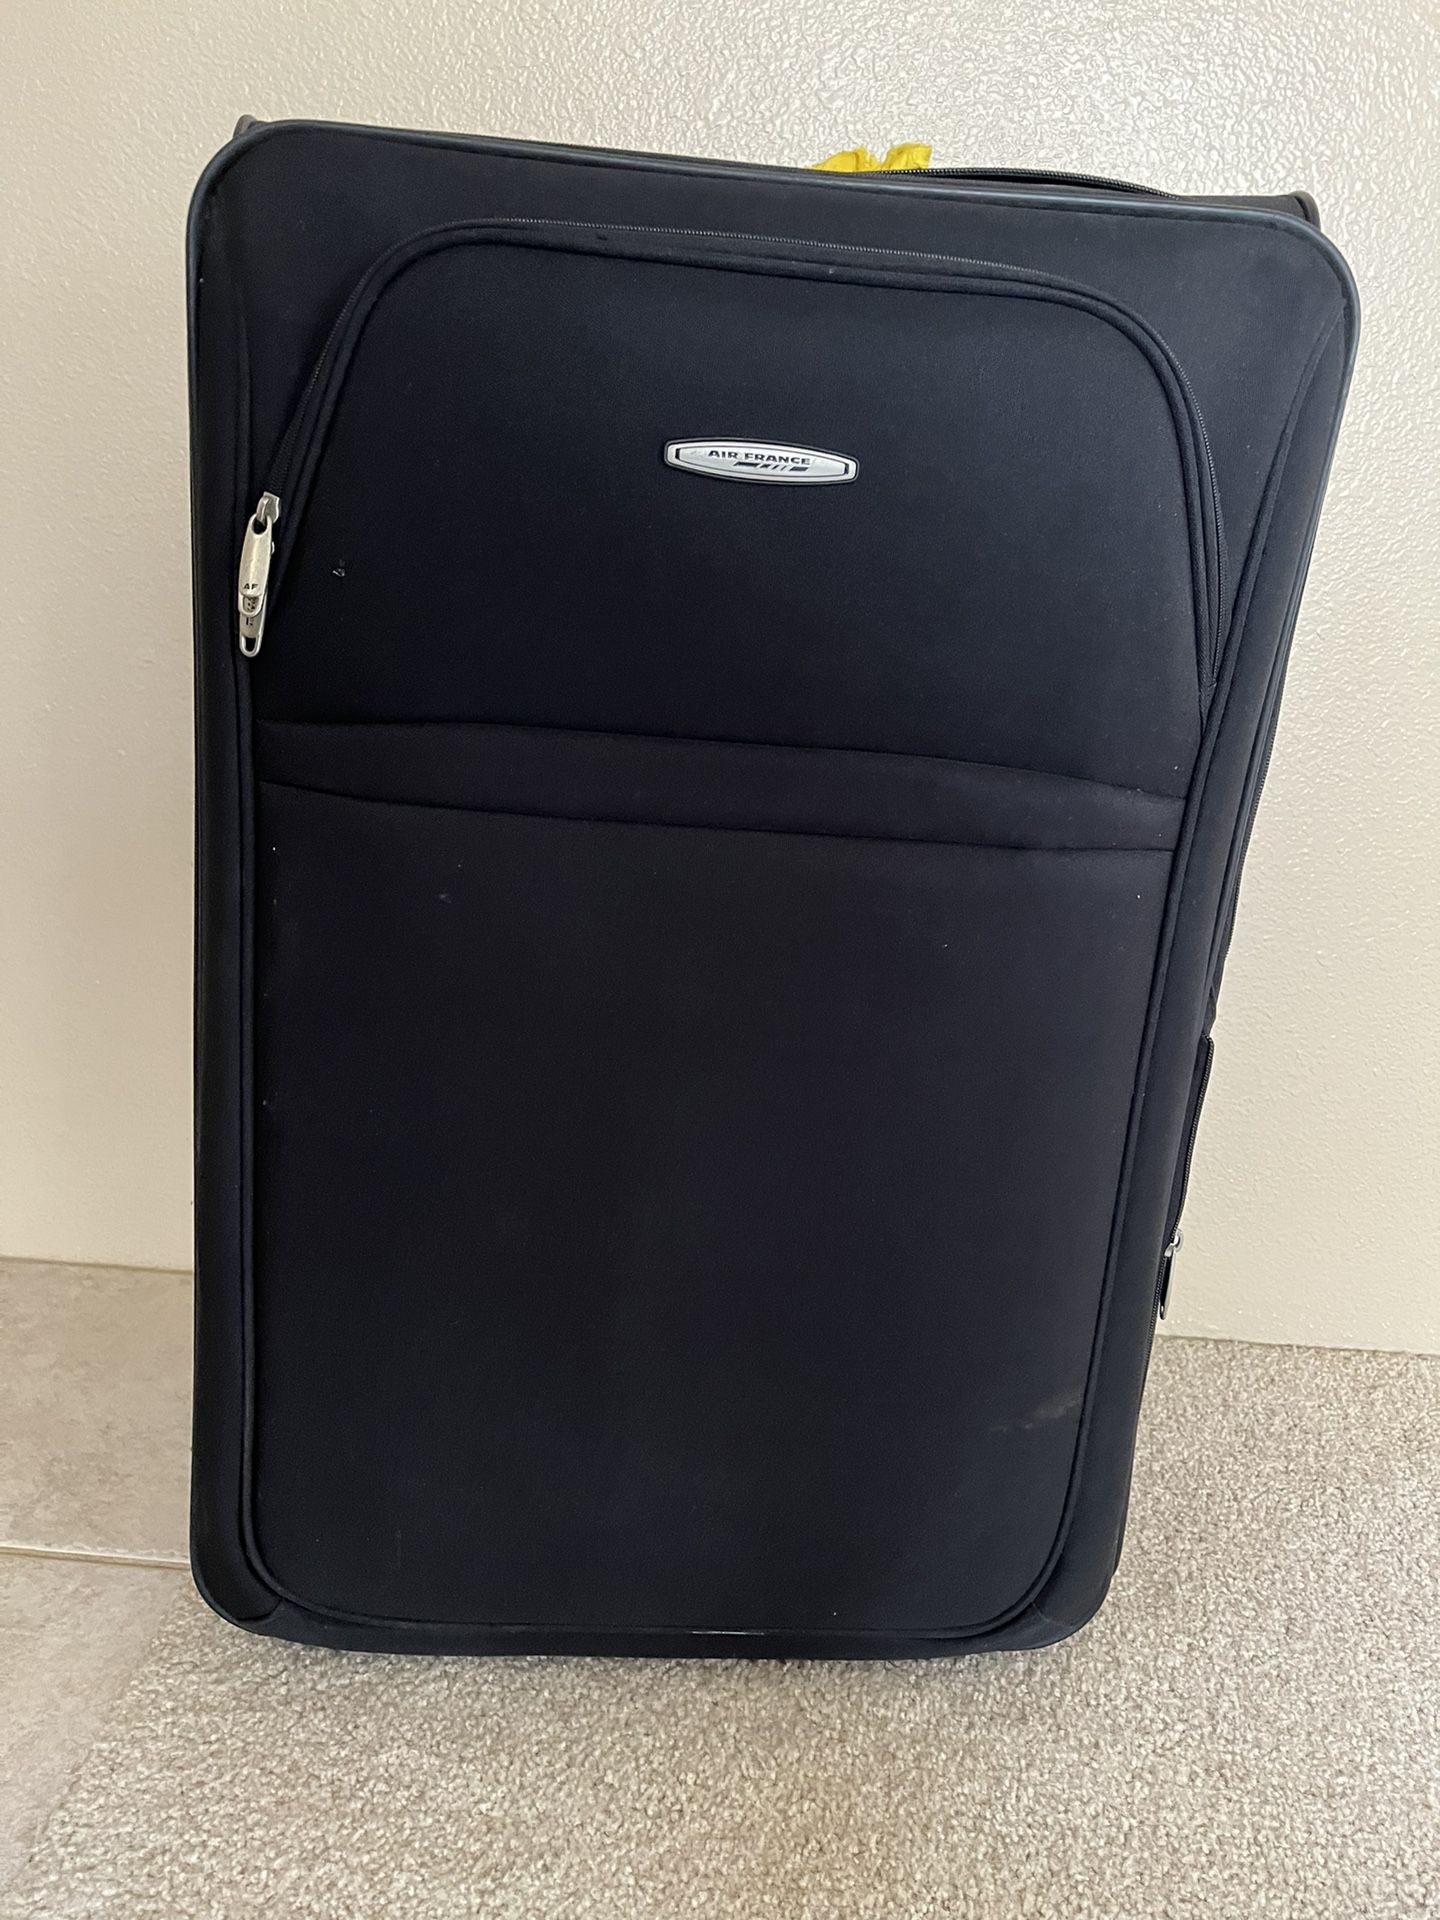 Louis Vuitton Pegase 65 XL LV monogram Suitcase Luggage Travel Bag Purse  for Sale in Mililani, HI - OfferUp